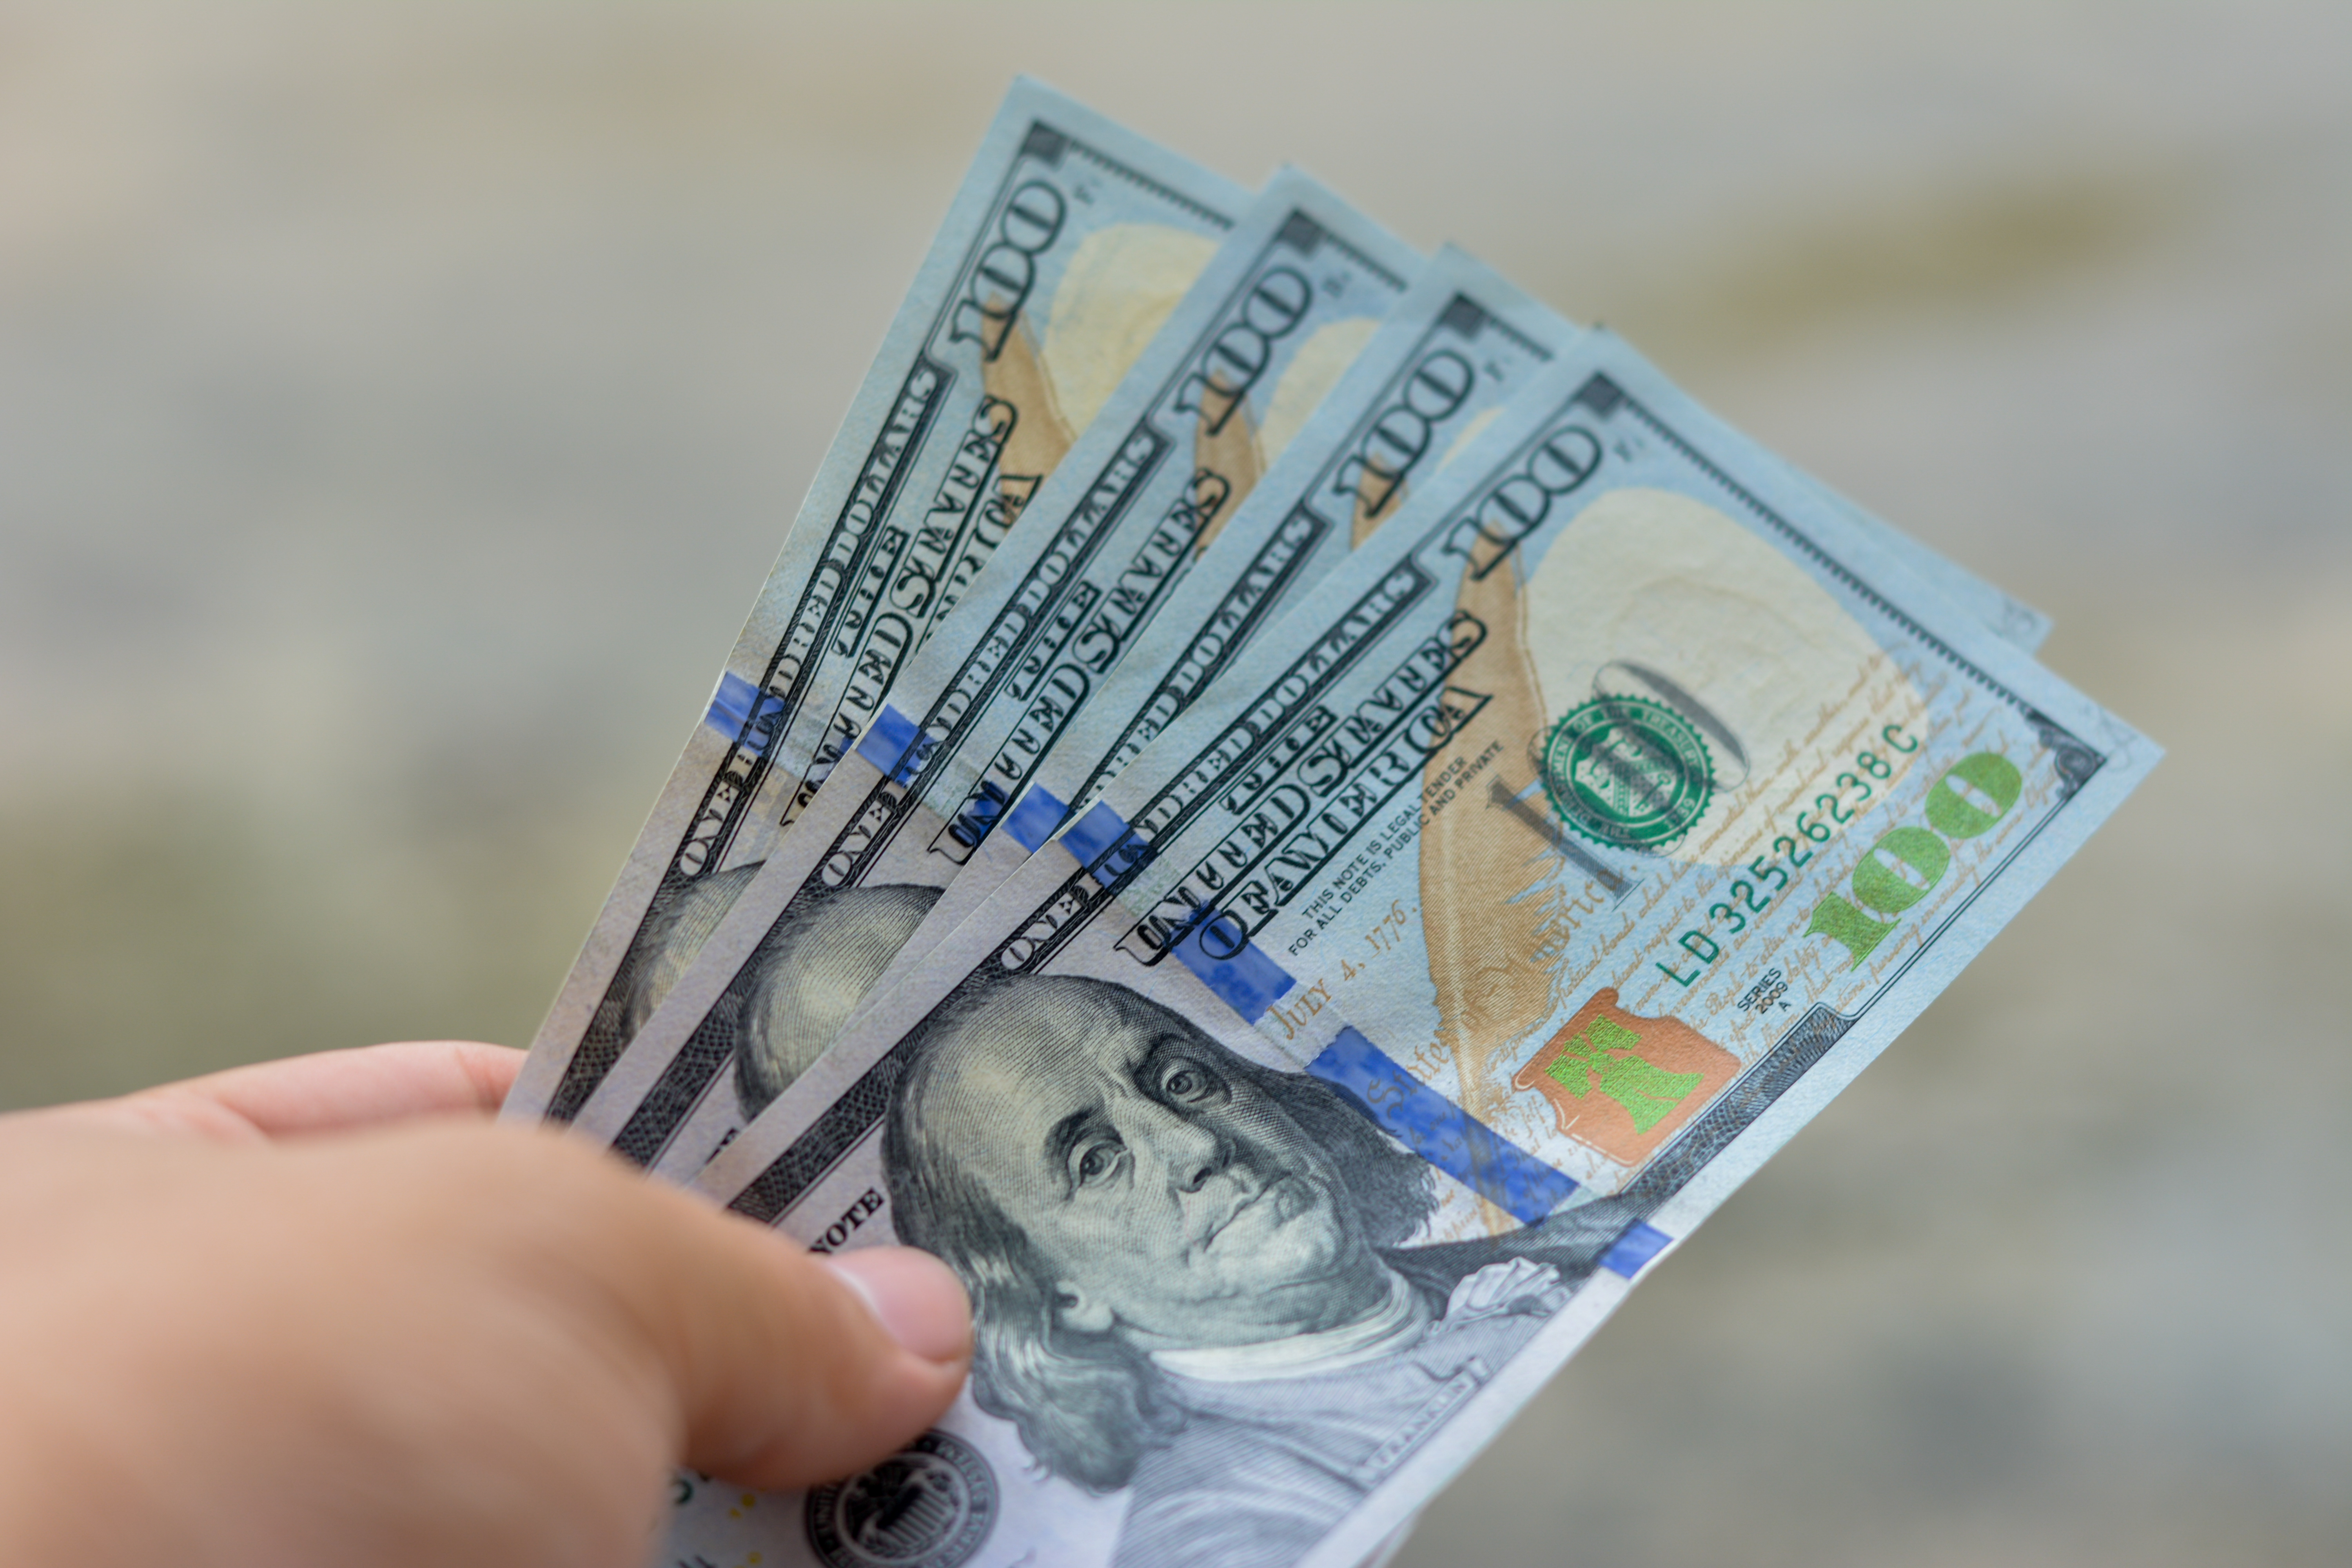 $400 in cash. | Source: Shutterstock